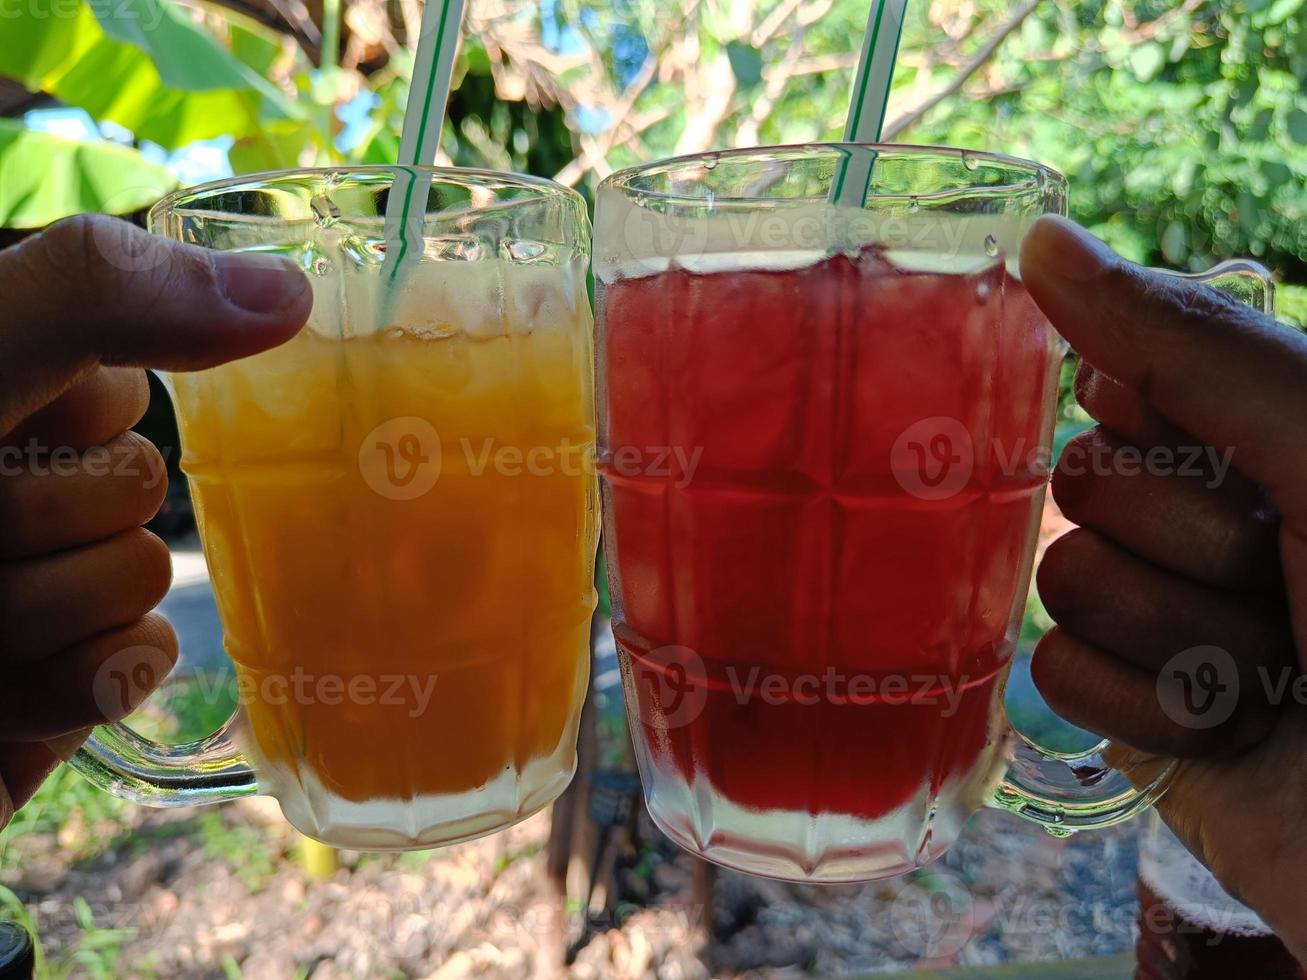 vrienden juichen een glas sinaasappelsap en rosellesap toe om af te koelen in de zomer foto